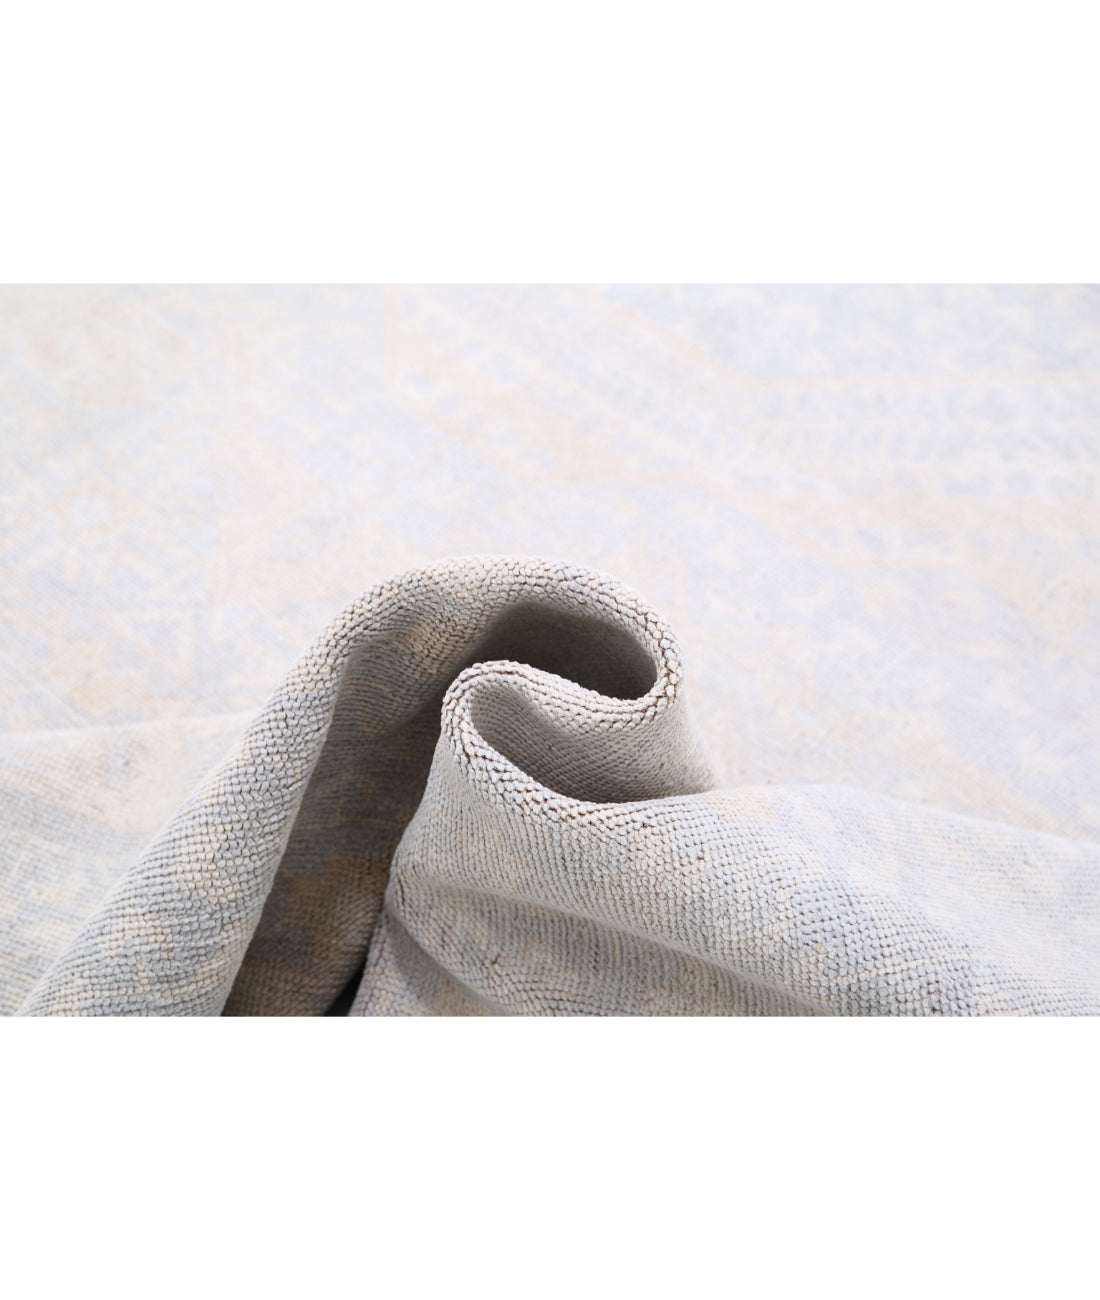 Hand Knotted Khotan Wool Rug - 8'9'' x 11'10'' 8'9'' x 11'10'' (263 X 355) / Grey / Ivory